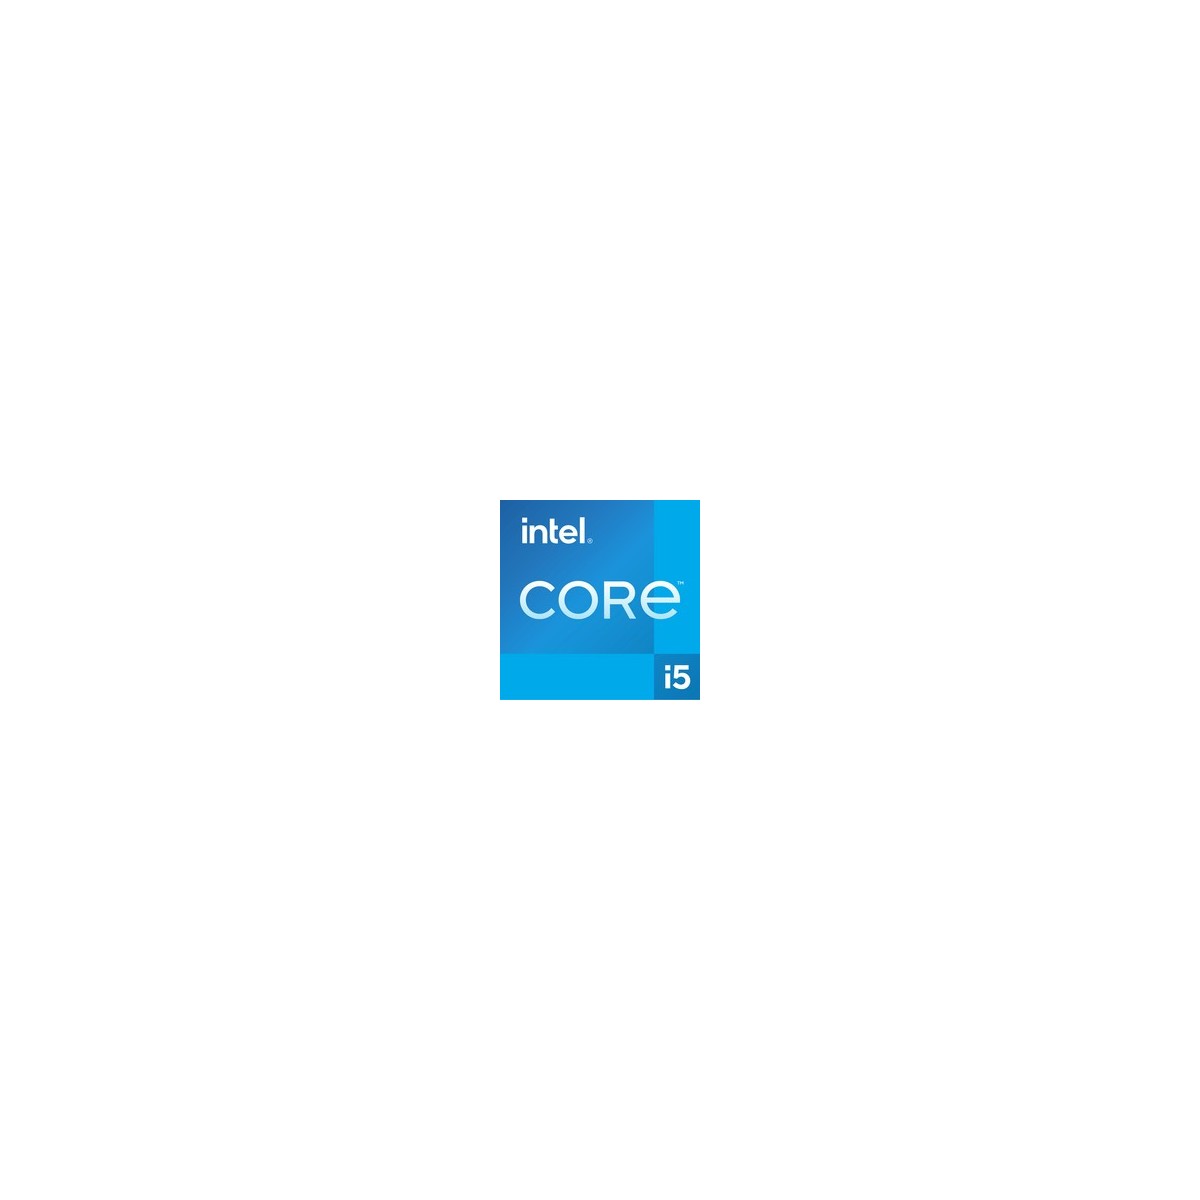 Intel CORE I5-14500 2.60GHZ